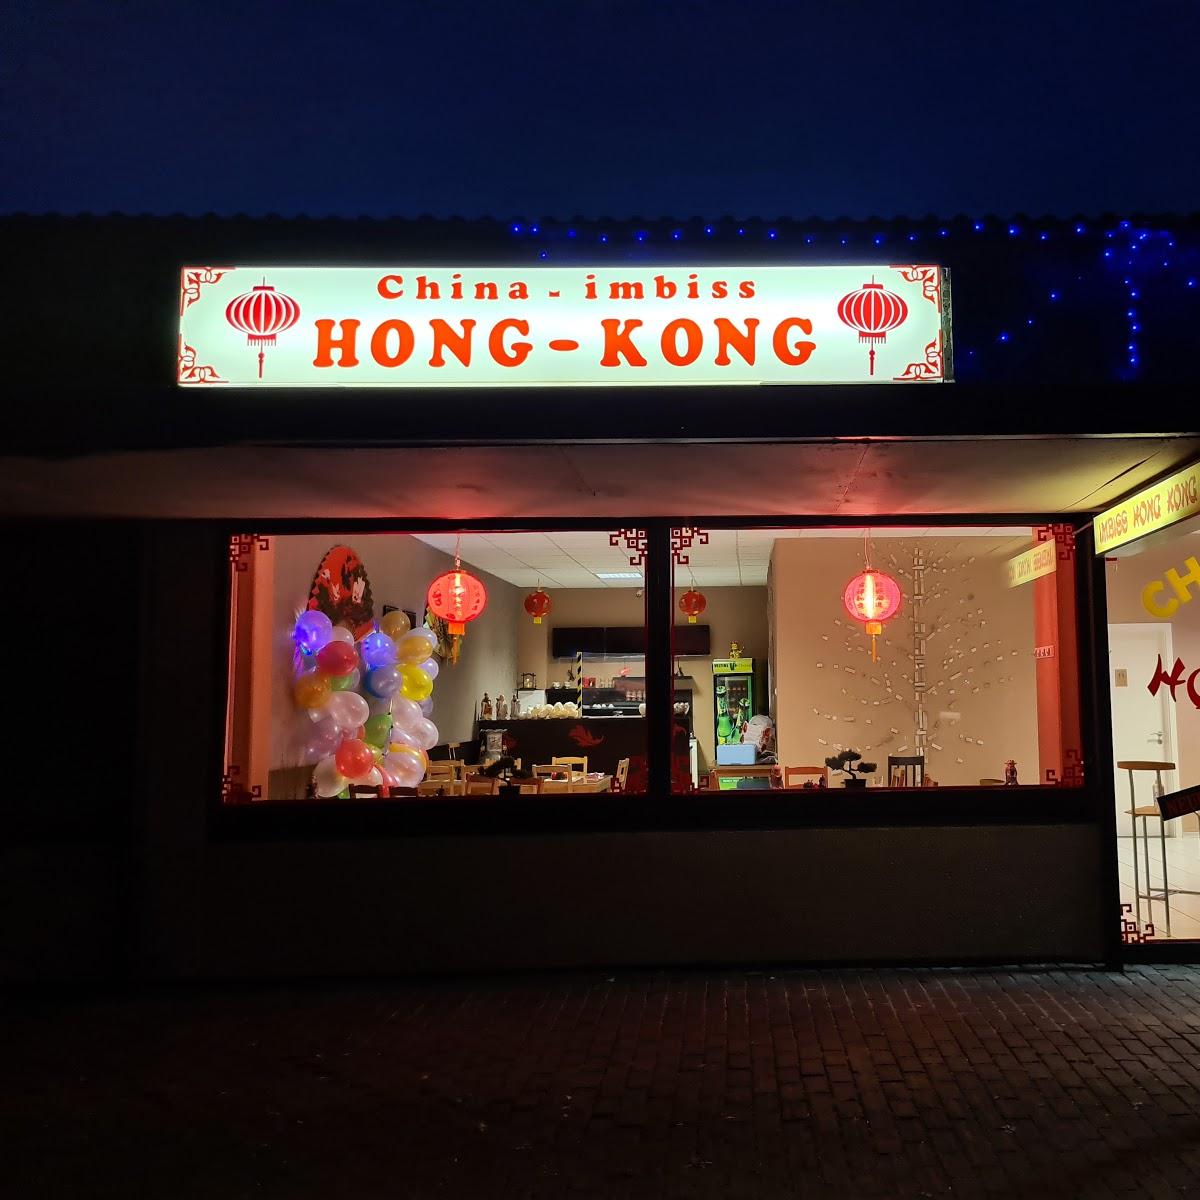 Restaurant "China-Imbiss Hong Kong" in Dorsten